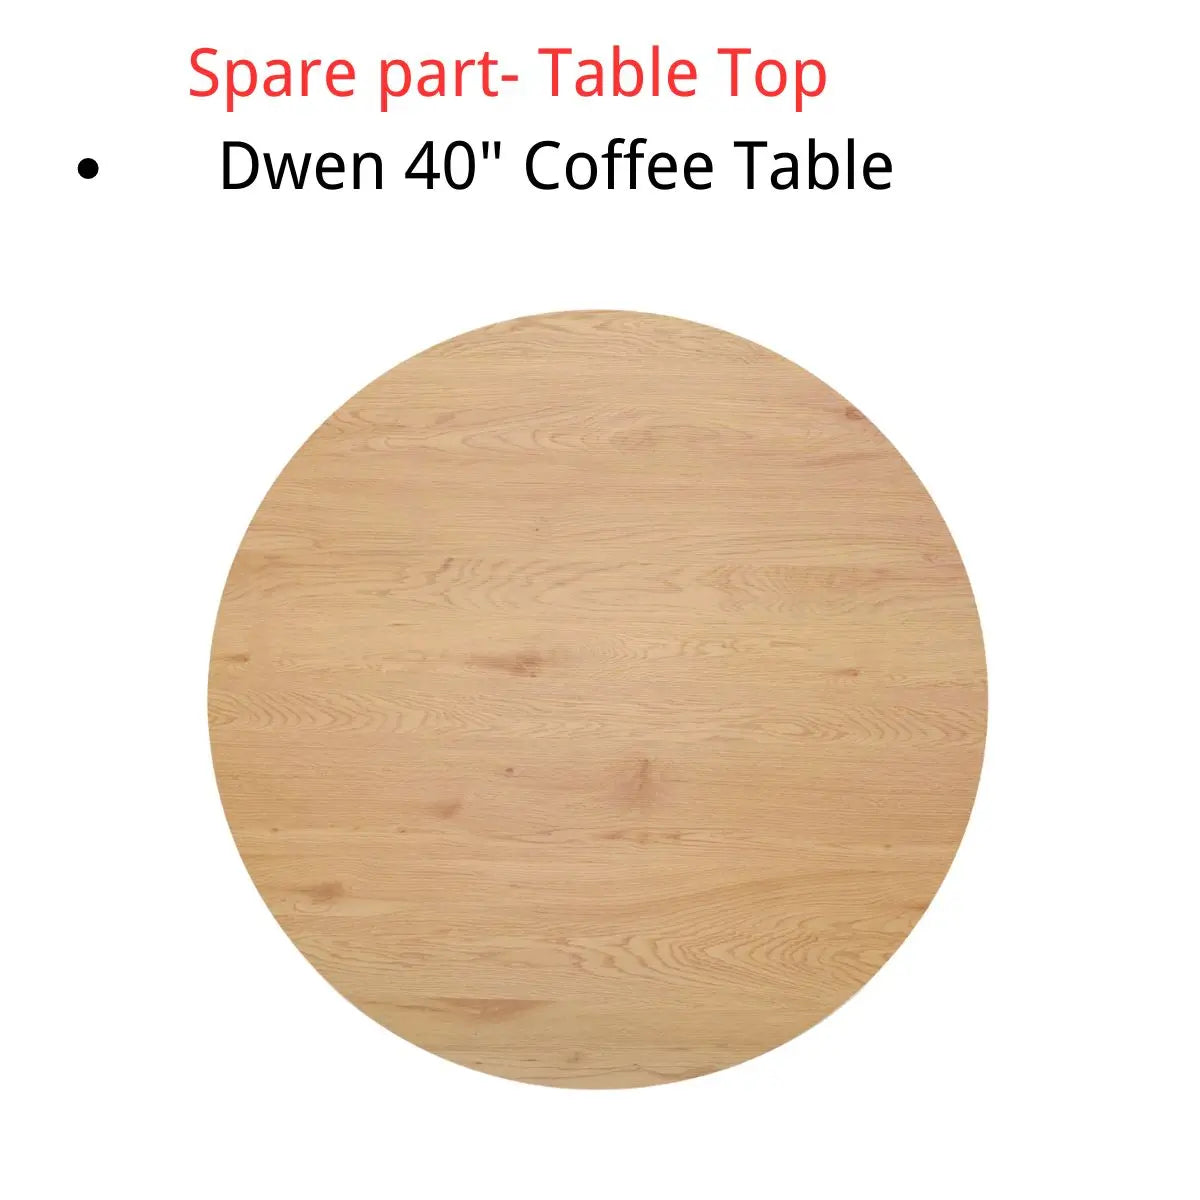 Spare Part-Dwen 40" Coffee Table Top - The Pop Maison